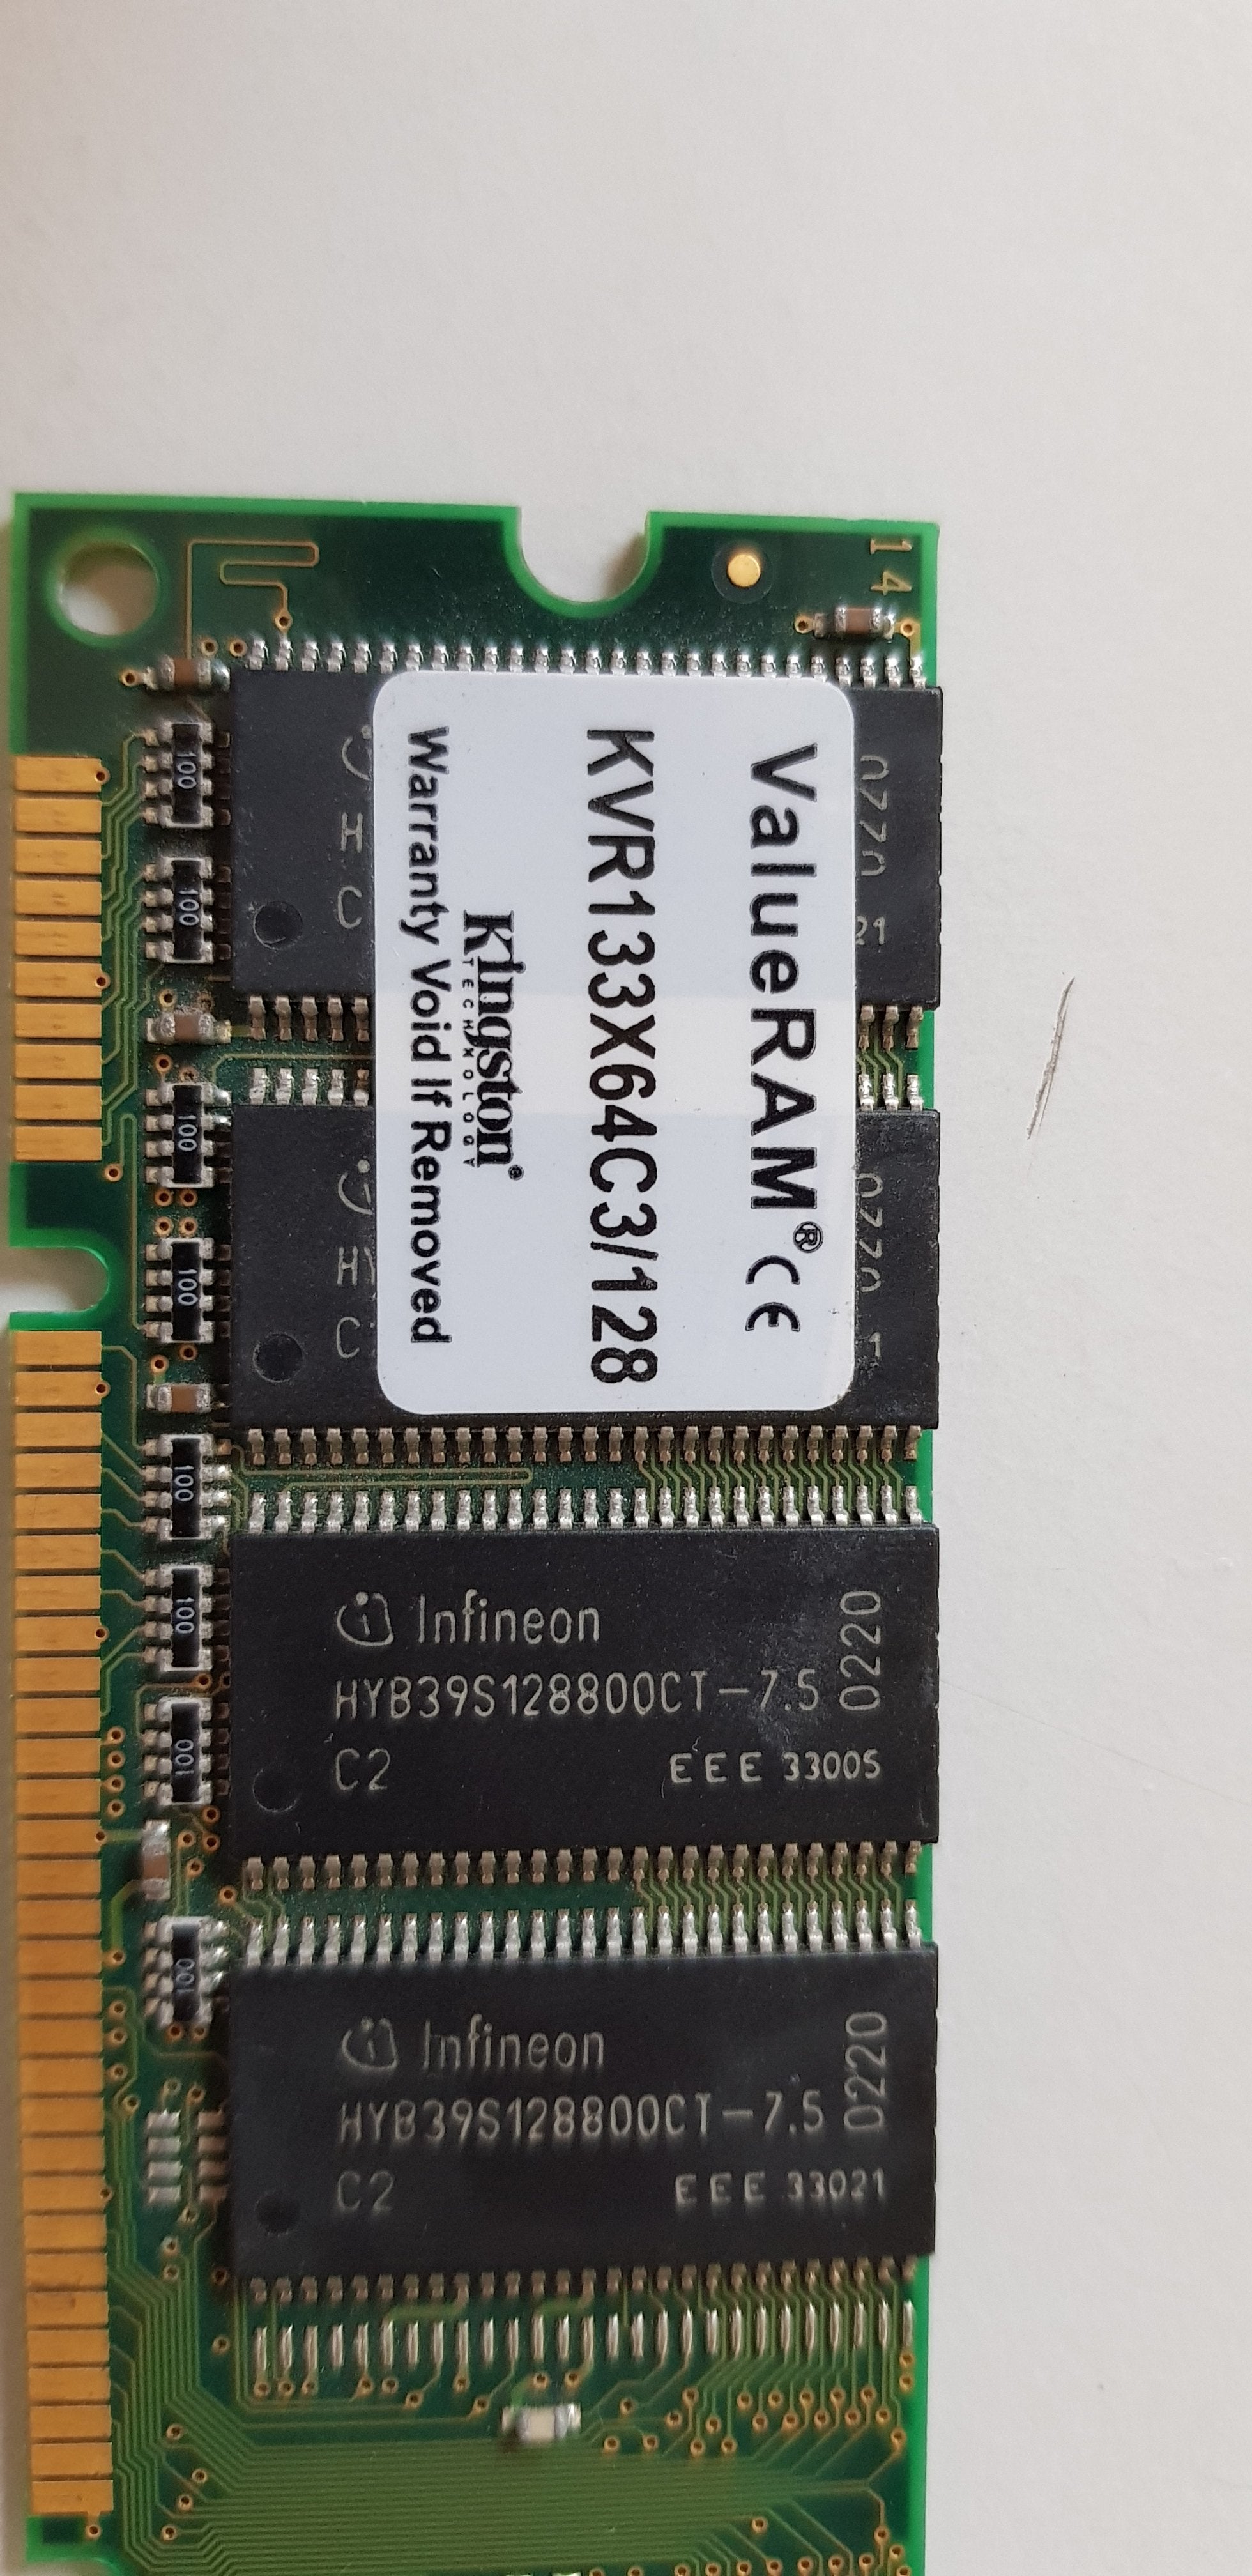 Kingston Value 128MB PC133 133MHz nonECC Unbuffered CL3 168-Pin DIMM Memory Module (KVR133X64C3/128)